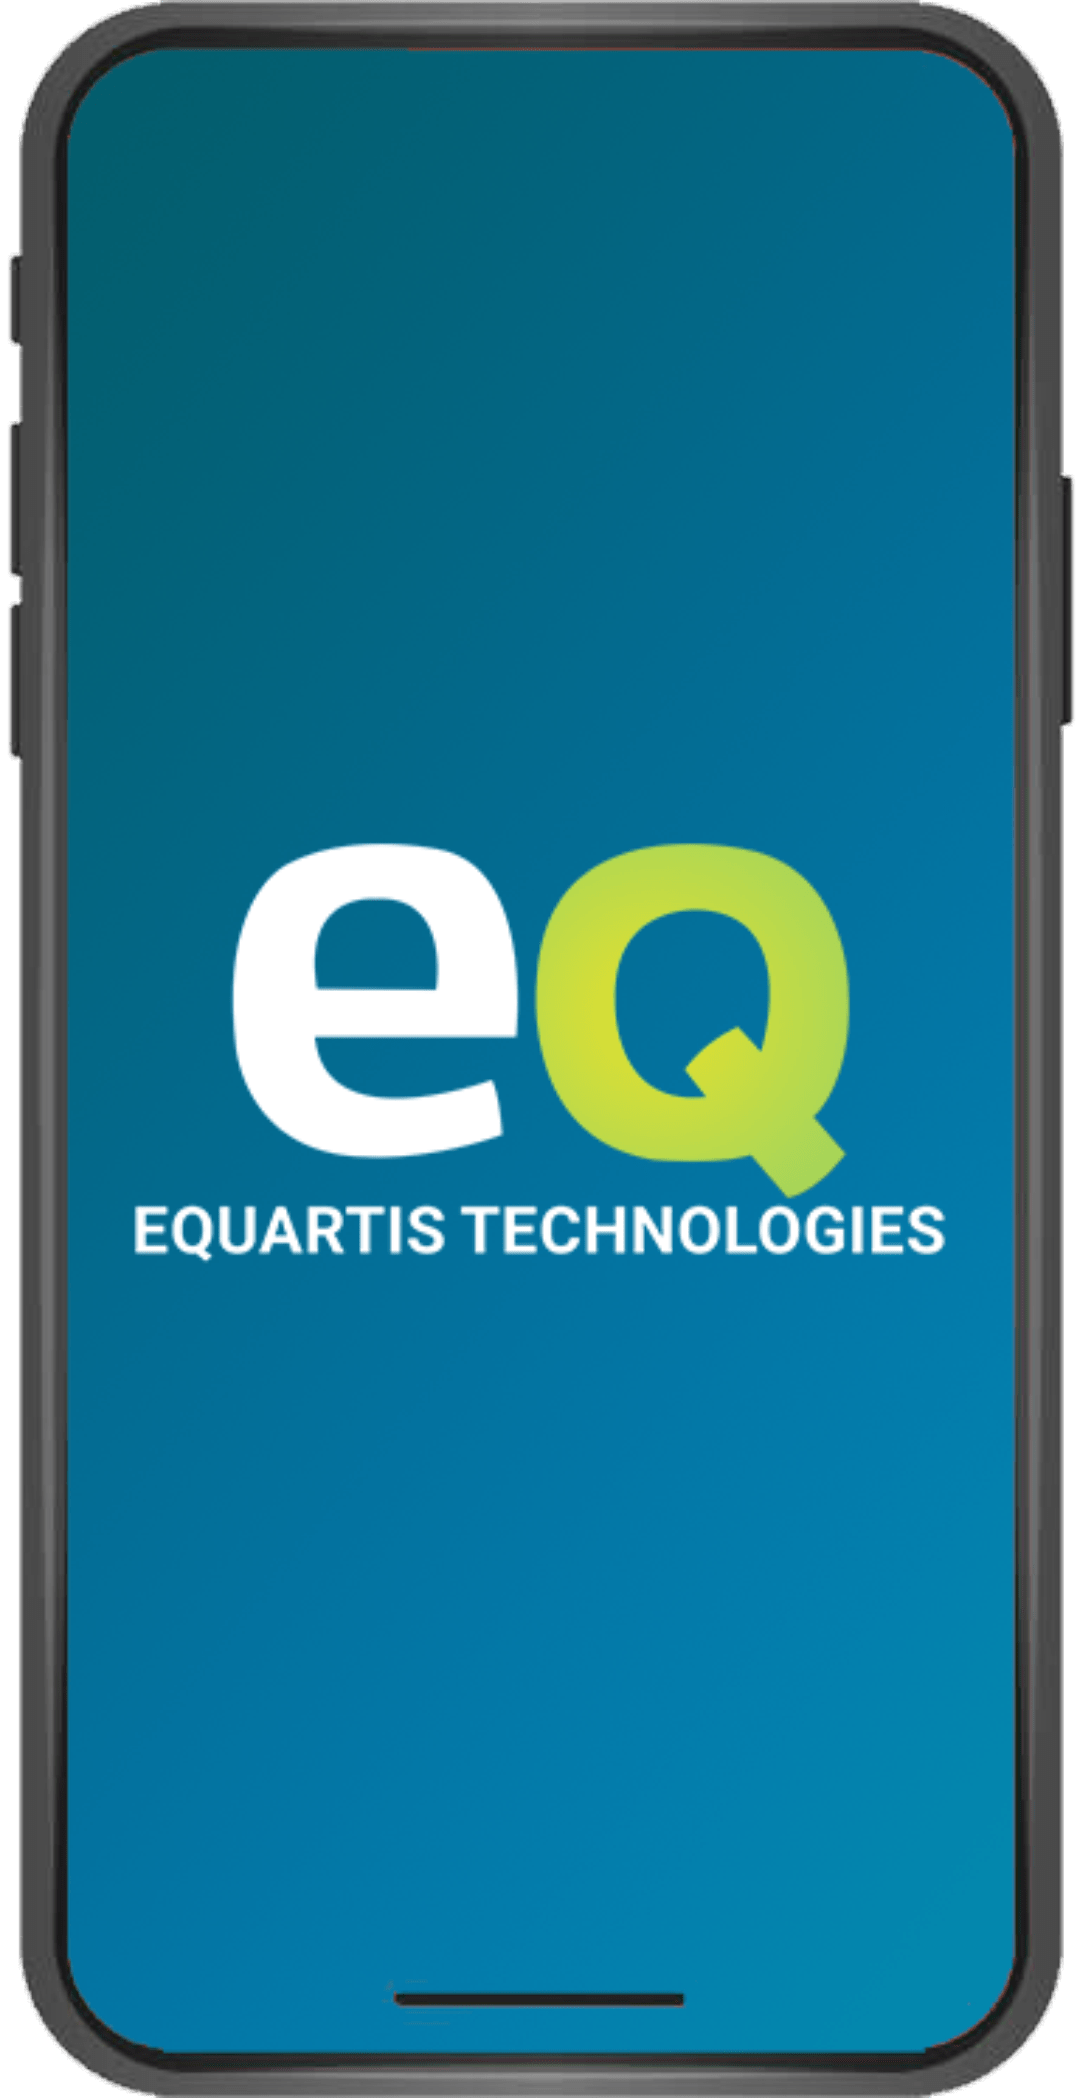 Equartis technologies logo on iPhone